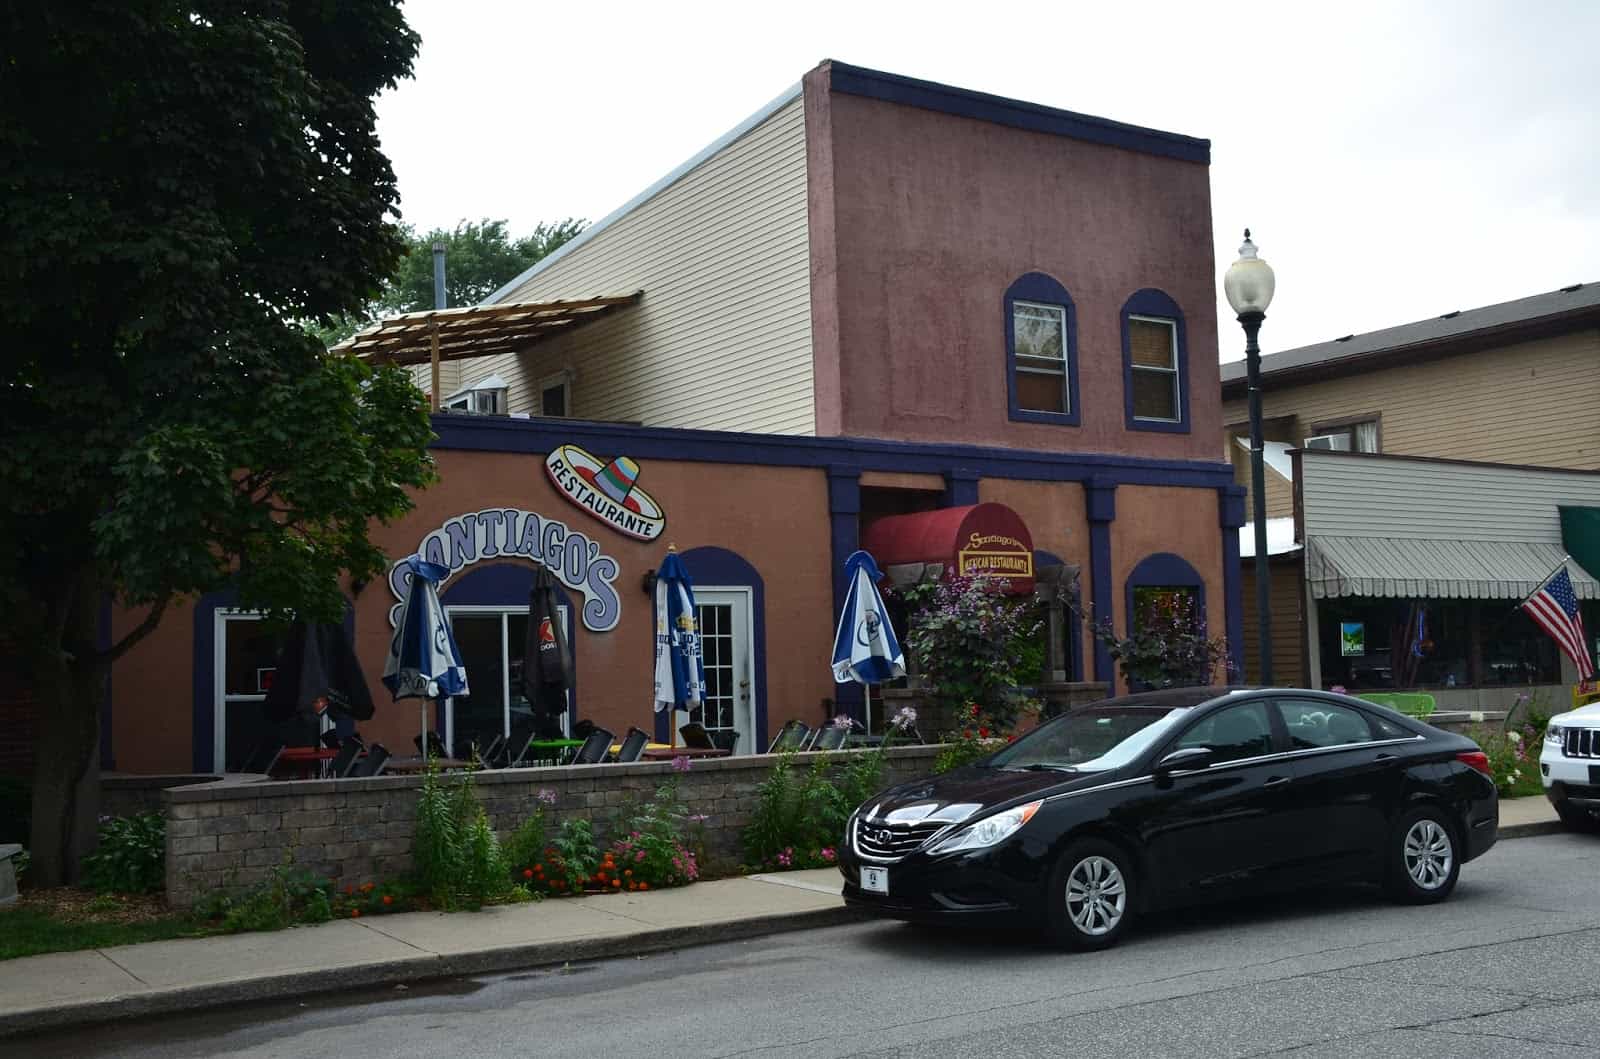 Santiago's Mexican Restaurant in Porter, Indiana